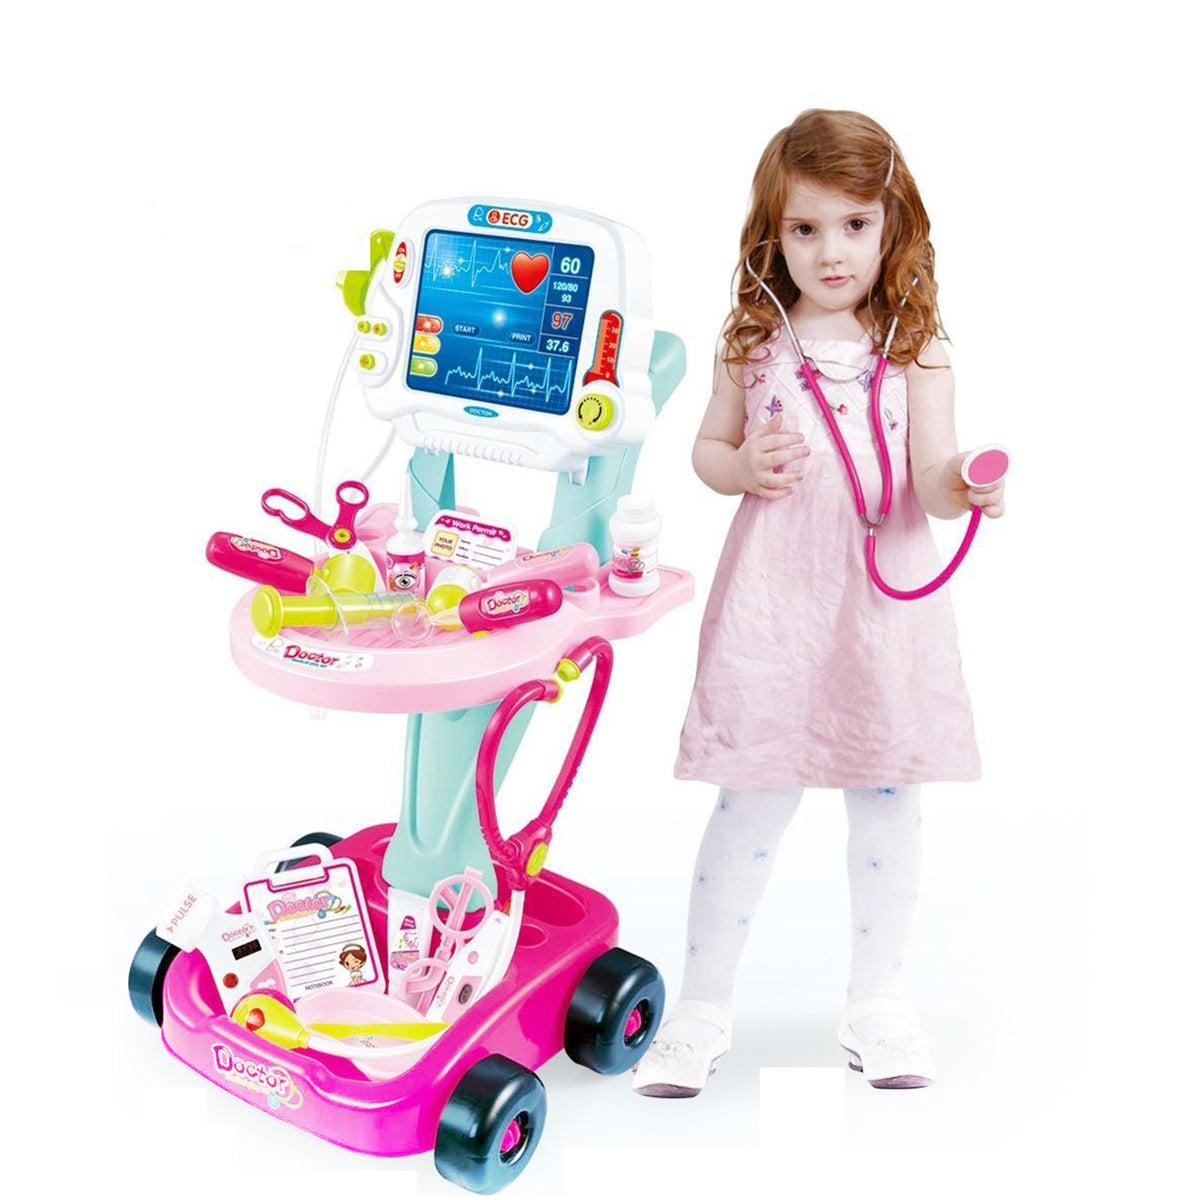 Kids Children's Doctors Medical Cart & ECG Machine for Toddler Play